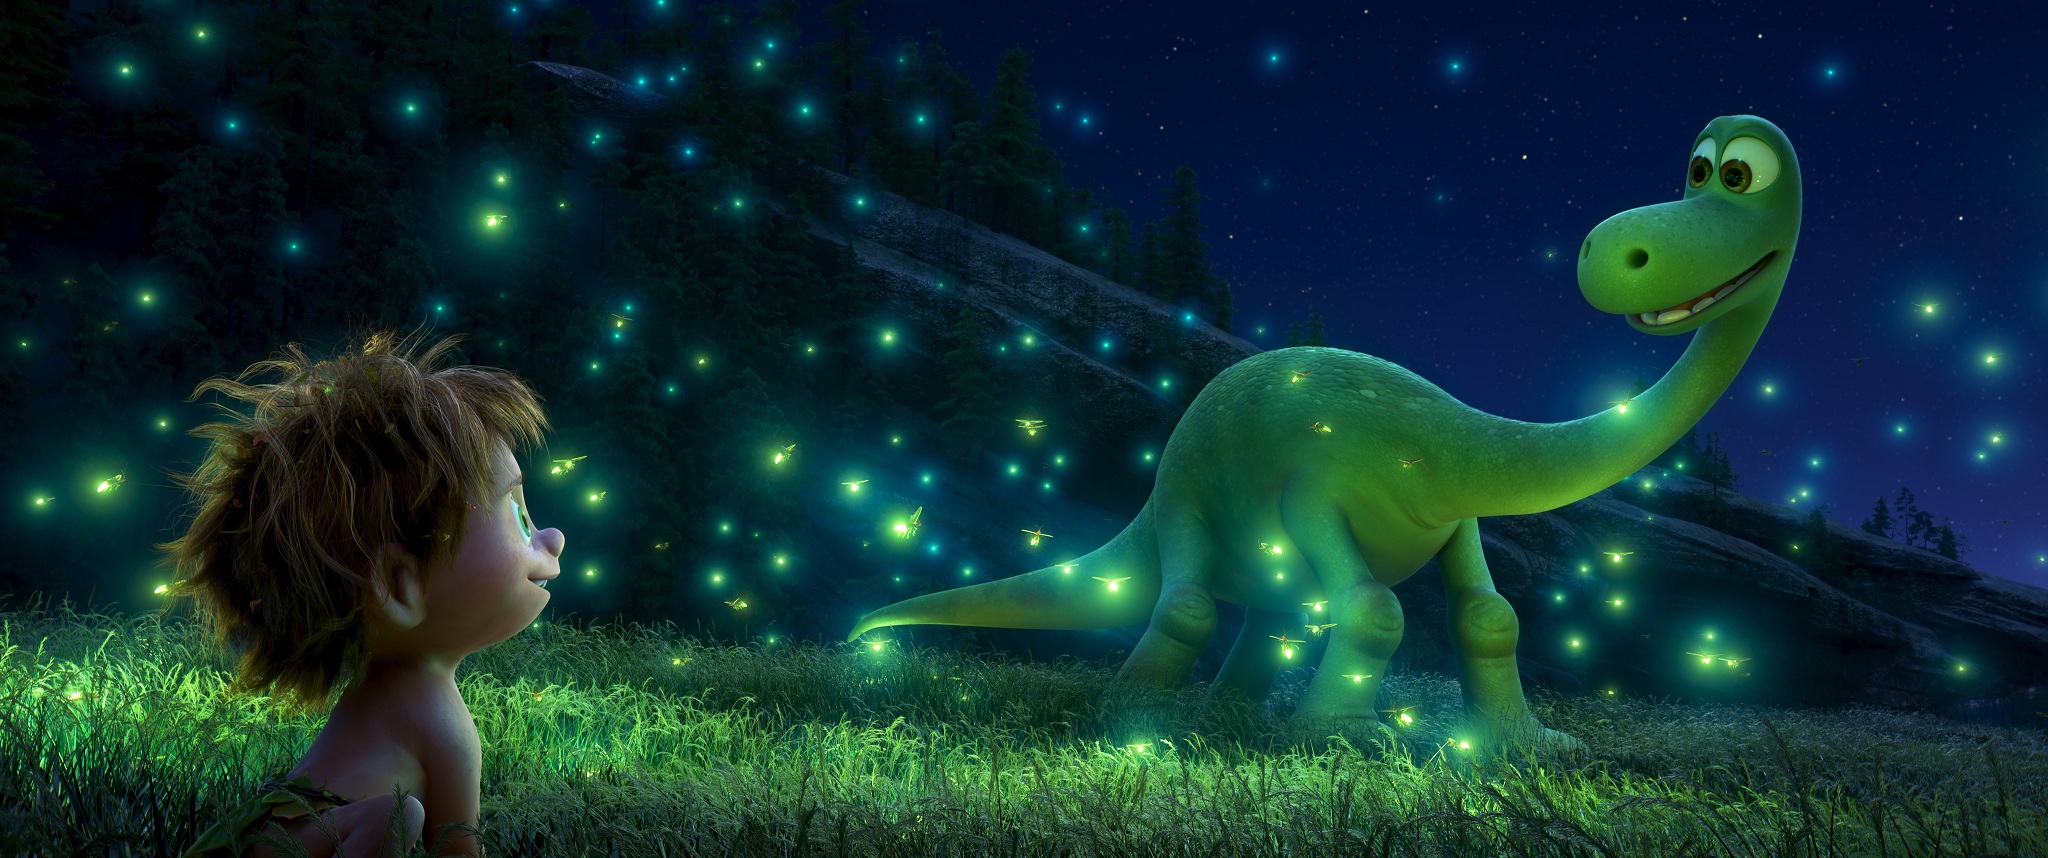 Official Trailer of Disney & Pixar’s “The Good Dinosaur” Released